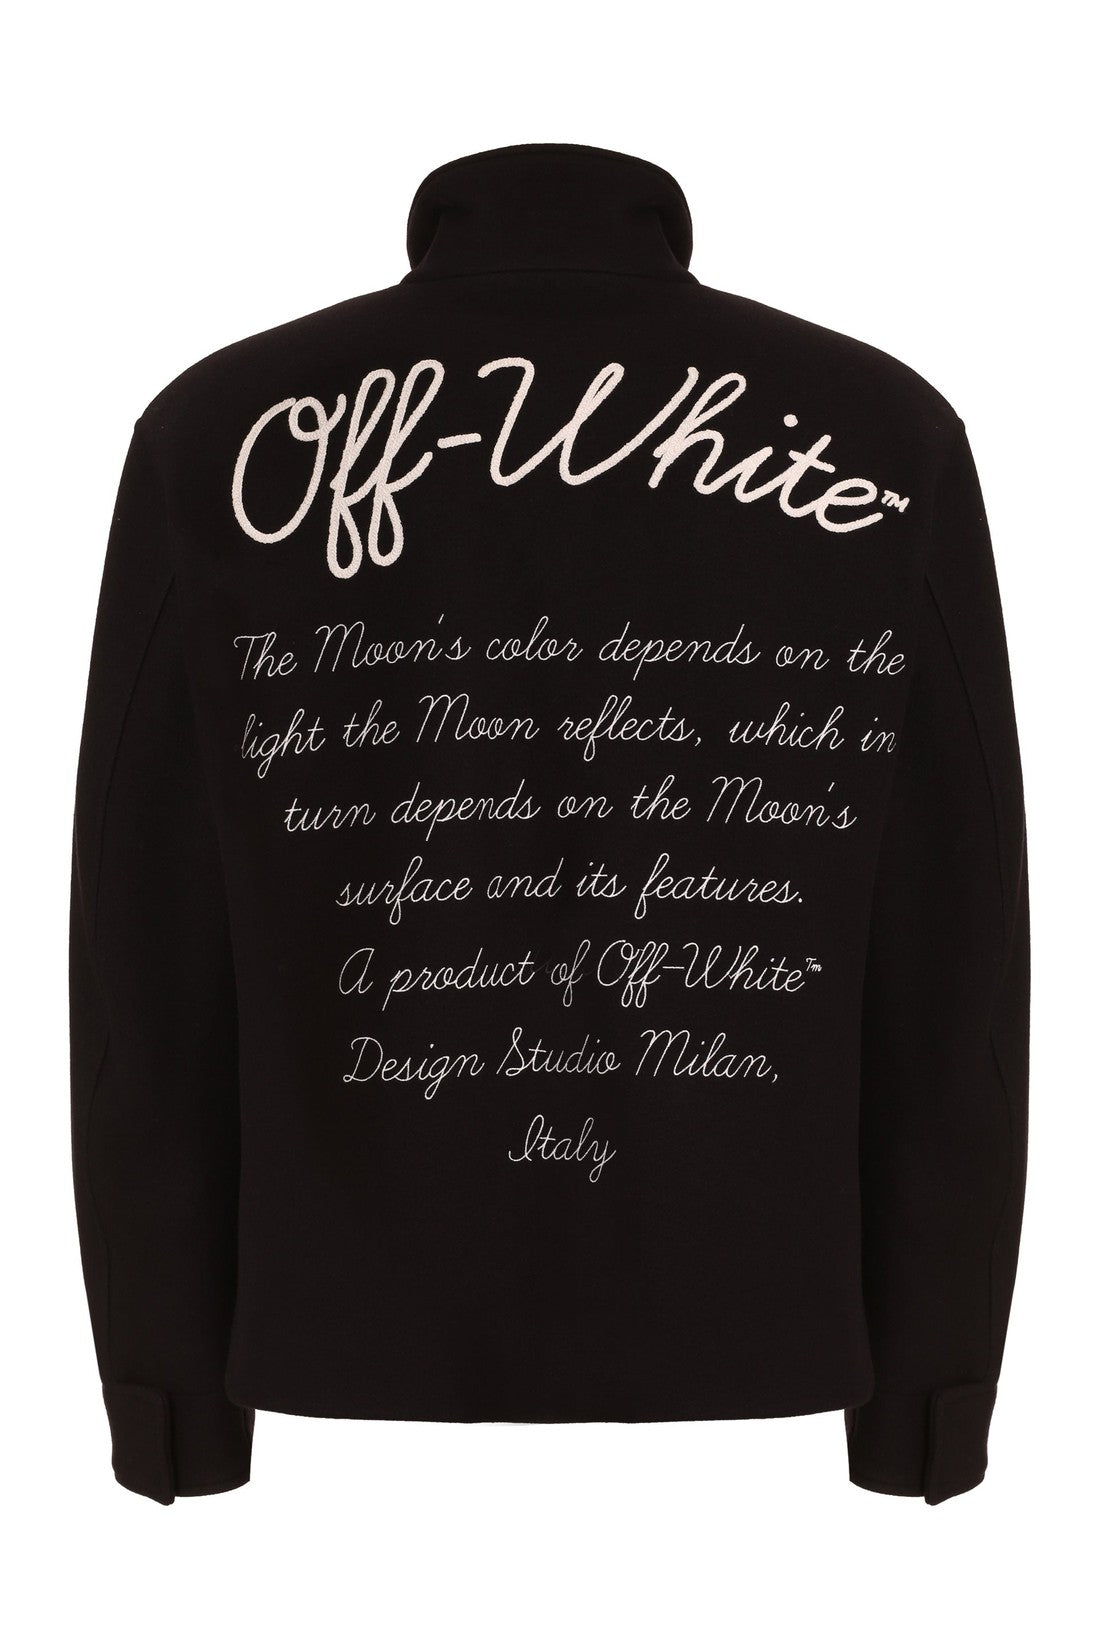 Off-White-OUTLET-SALE-Varsity virgin wool jacket-ARCHIVIST